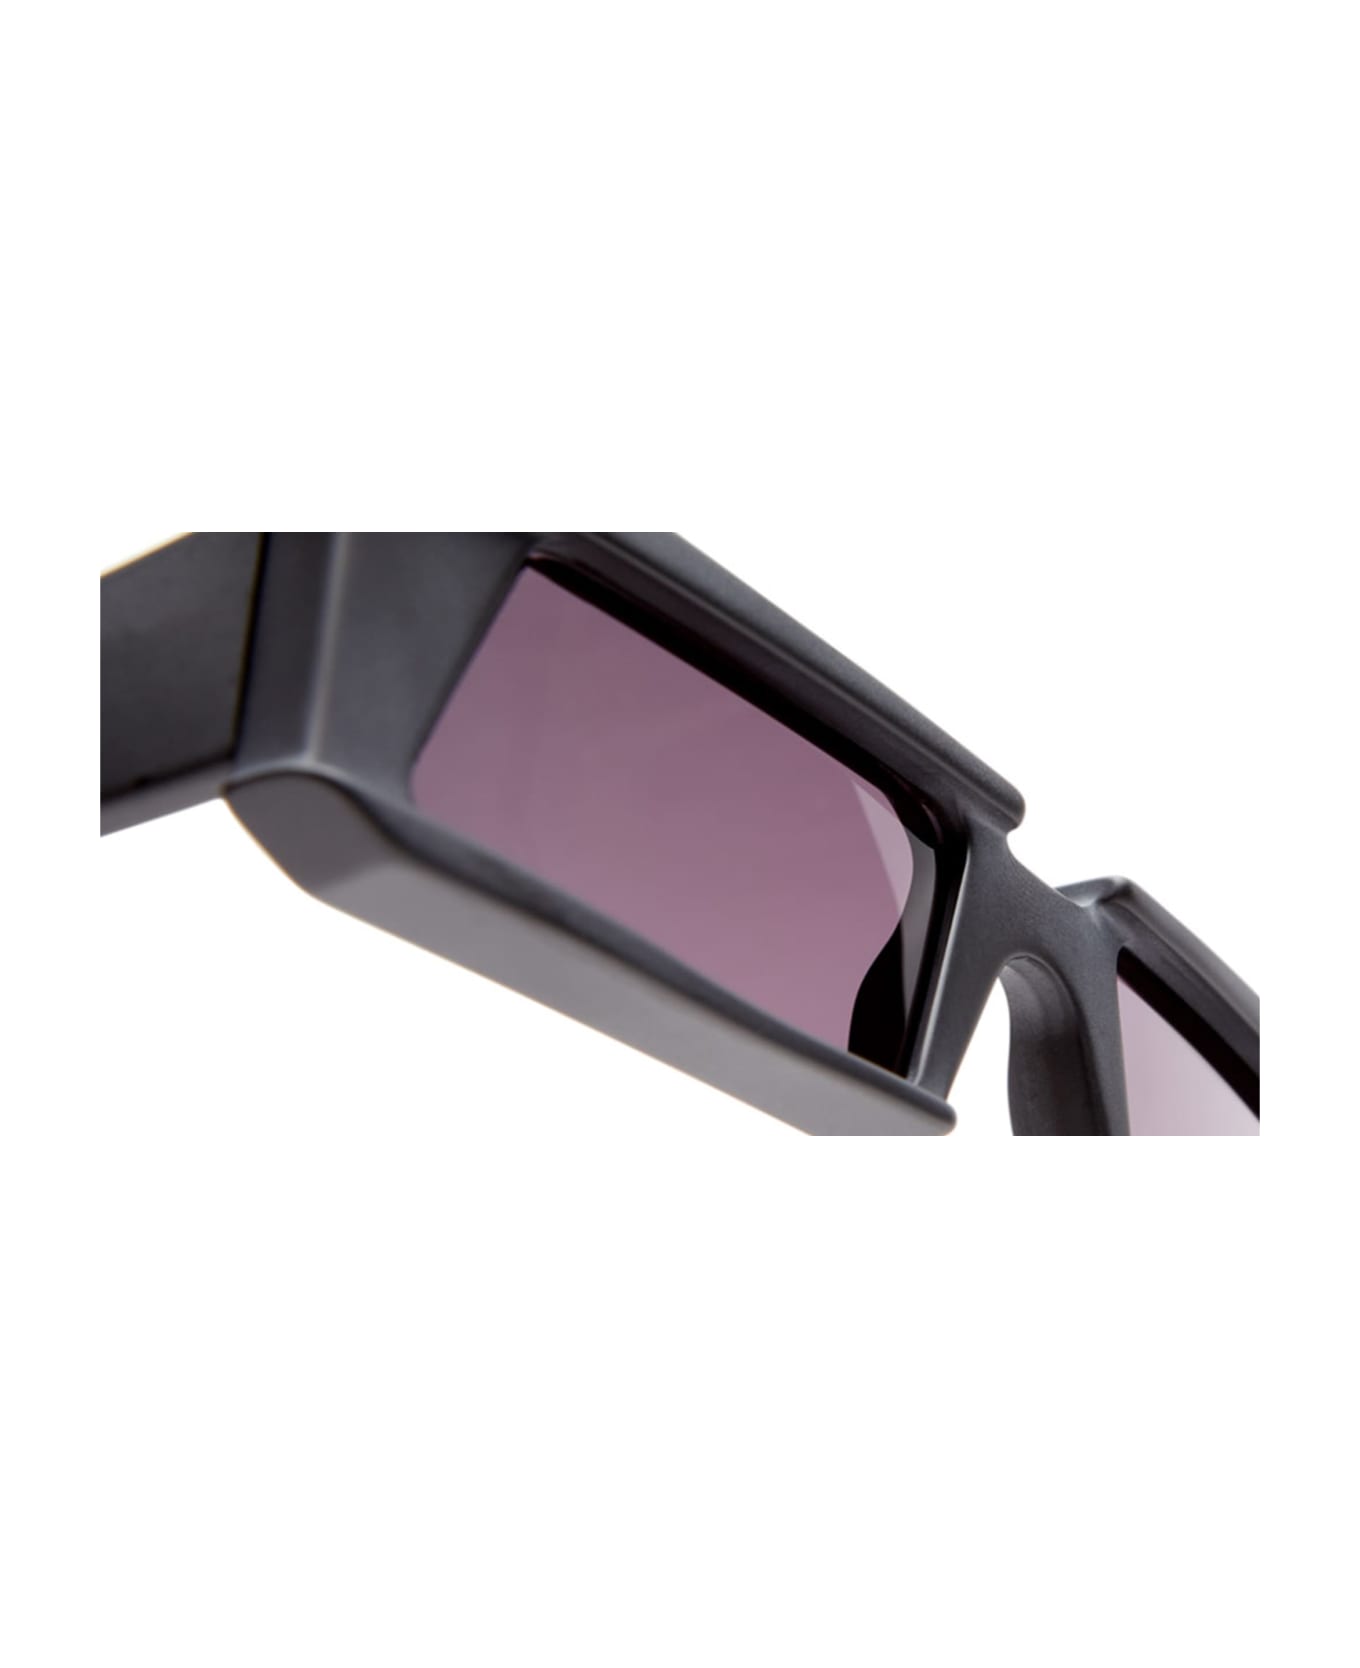 Kuboraum Mask X21 - Black Matte Cut Sunglasses - Matte black